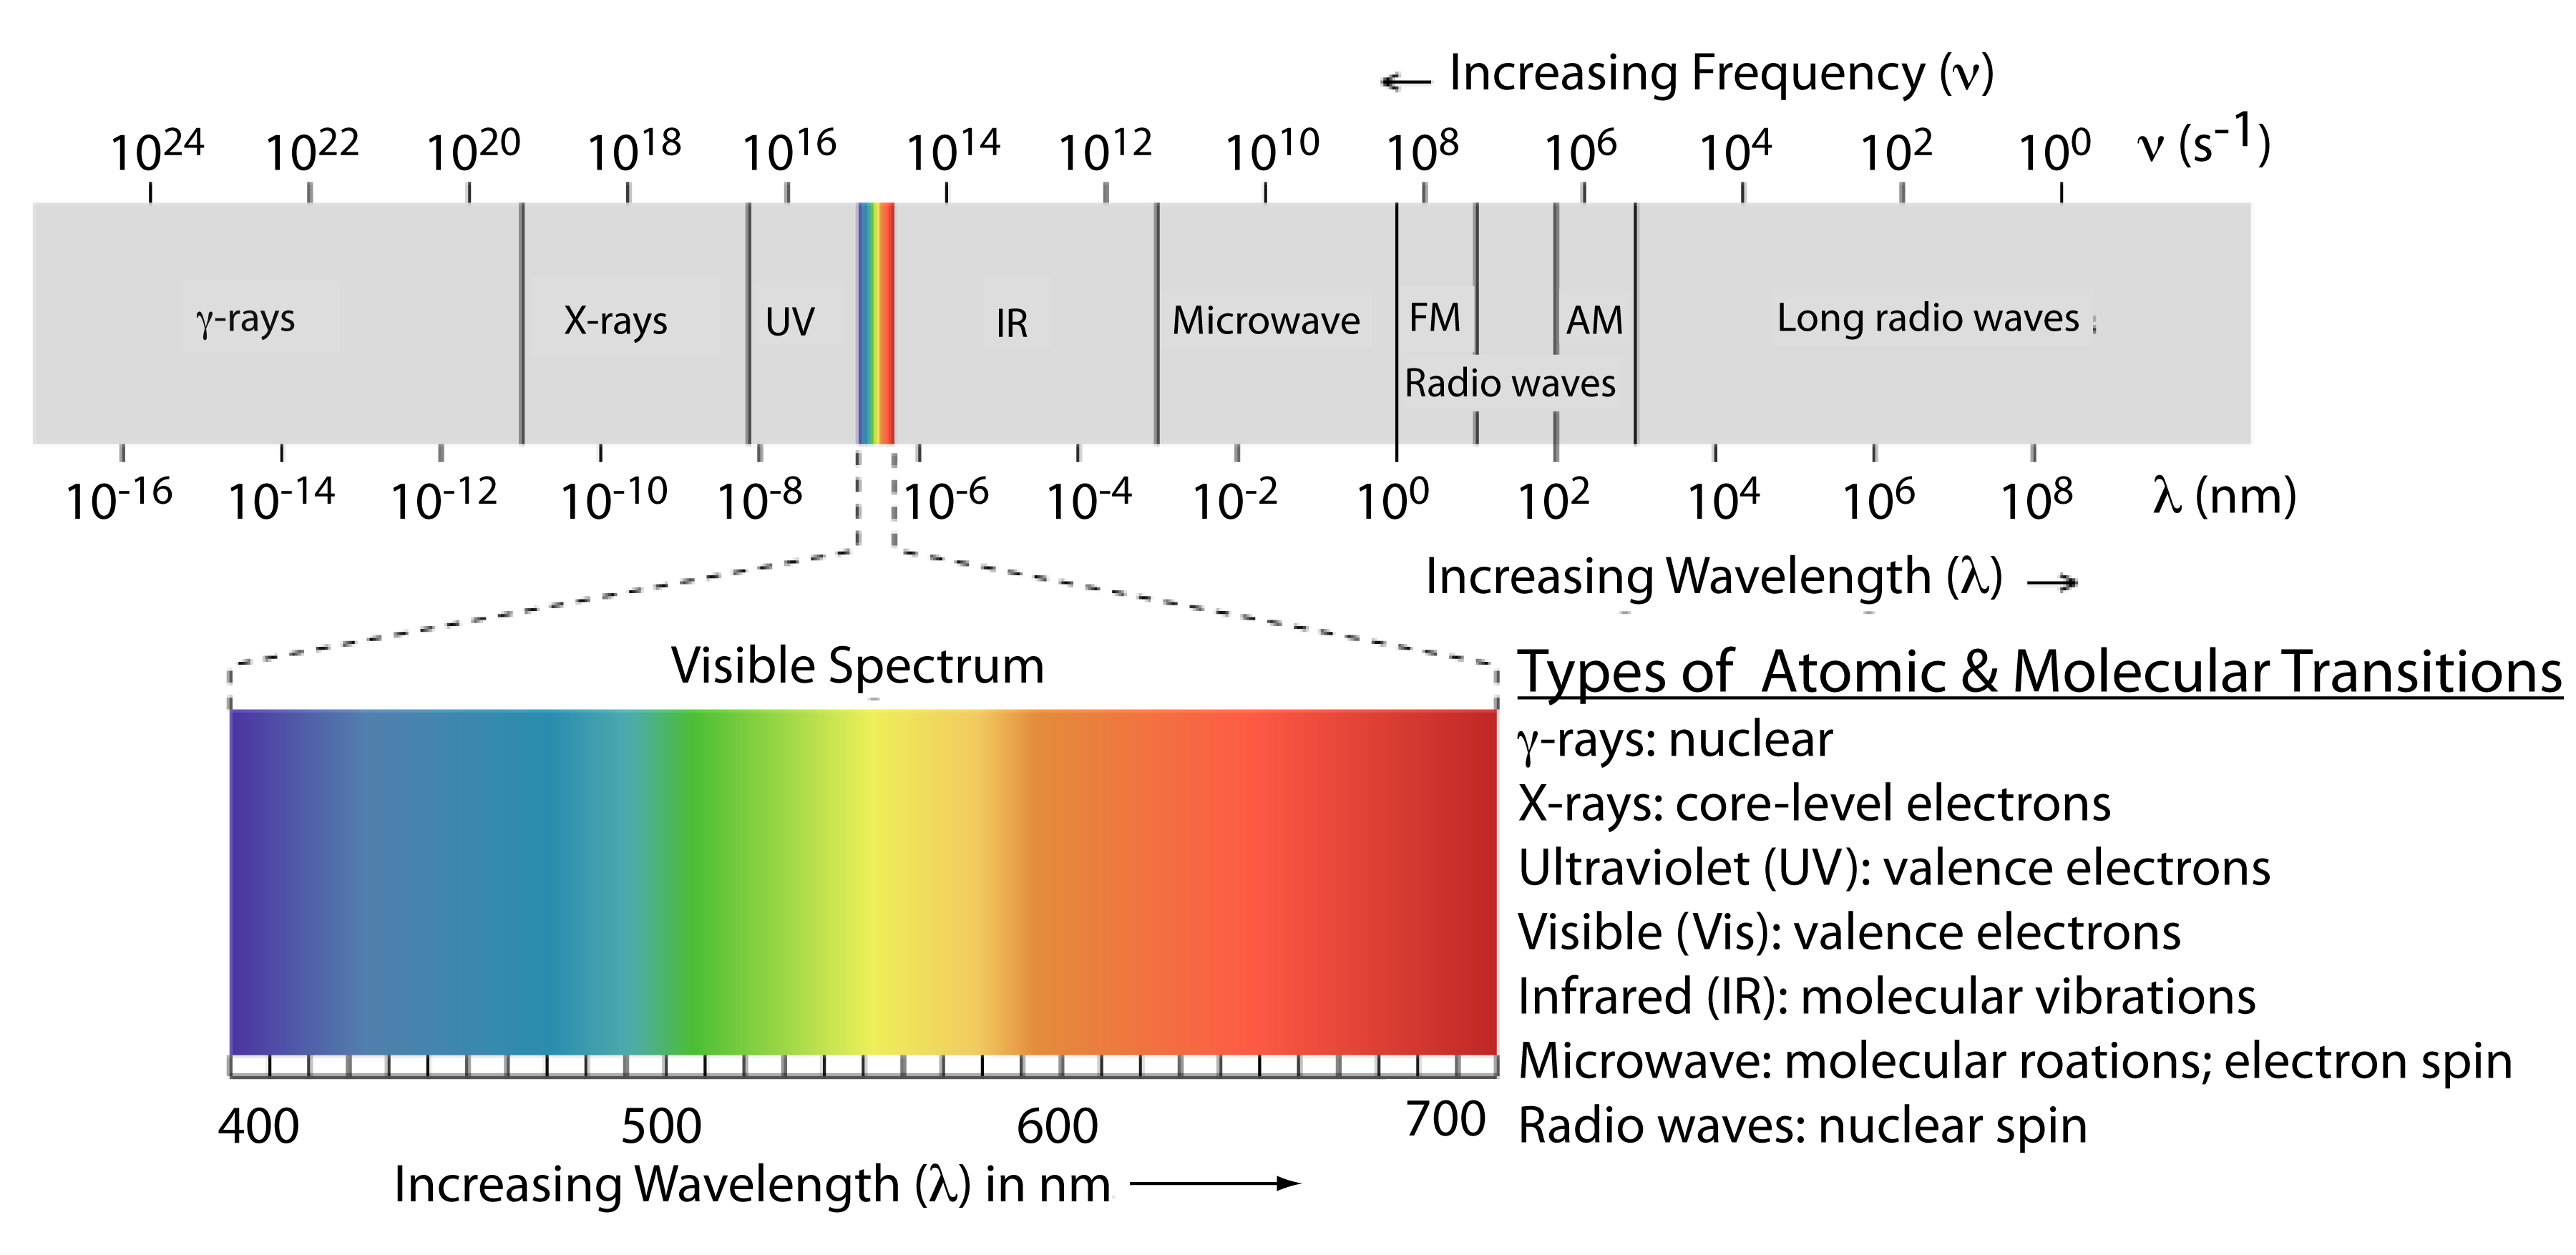 Visual Electromagnetic Spectrum Chart